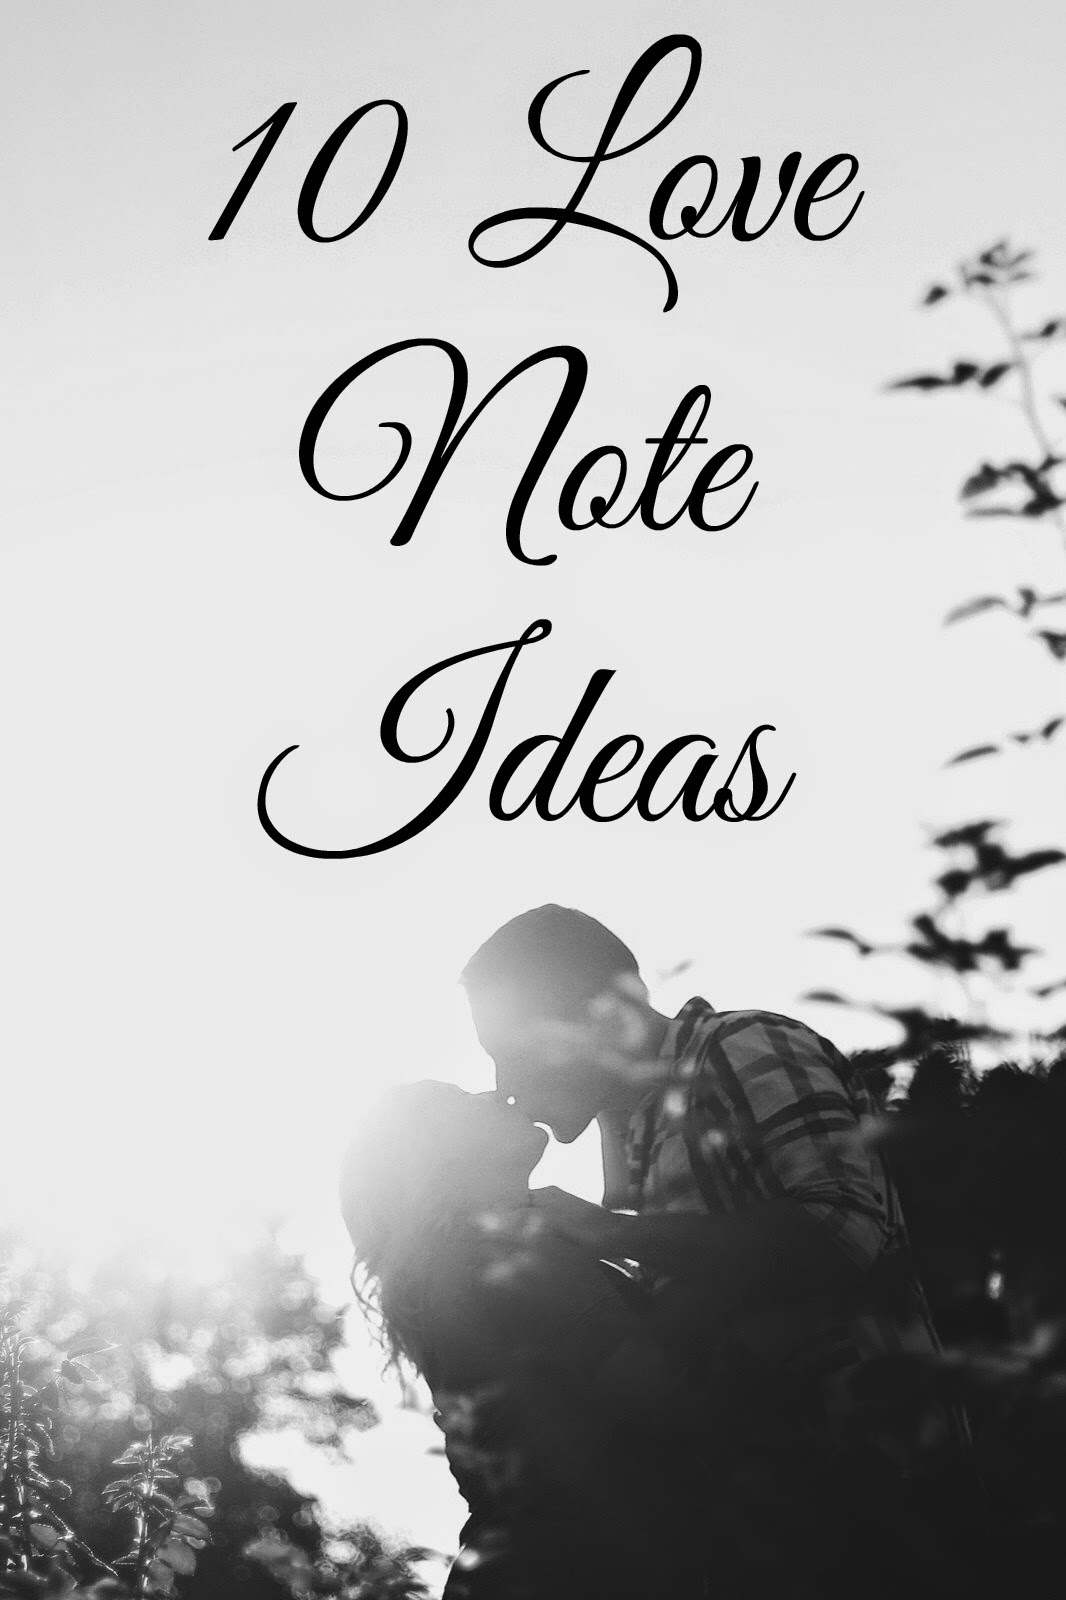 a little too jolley: 10 Love Note Ideas